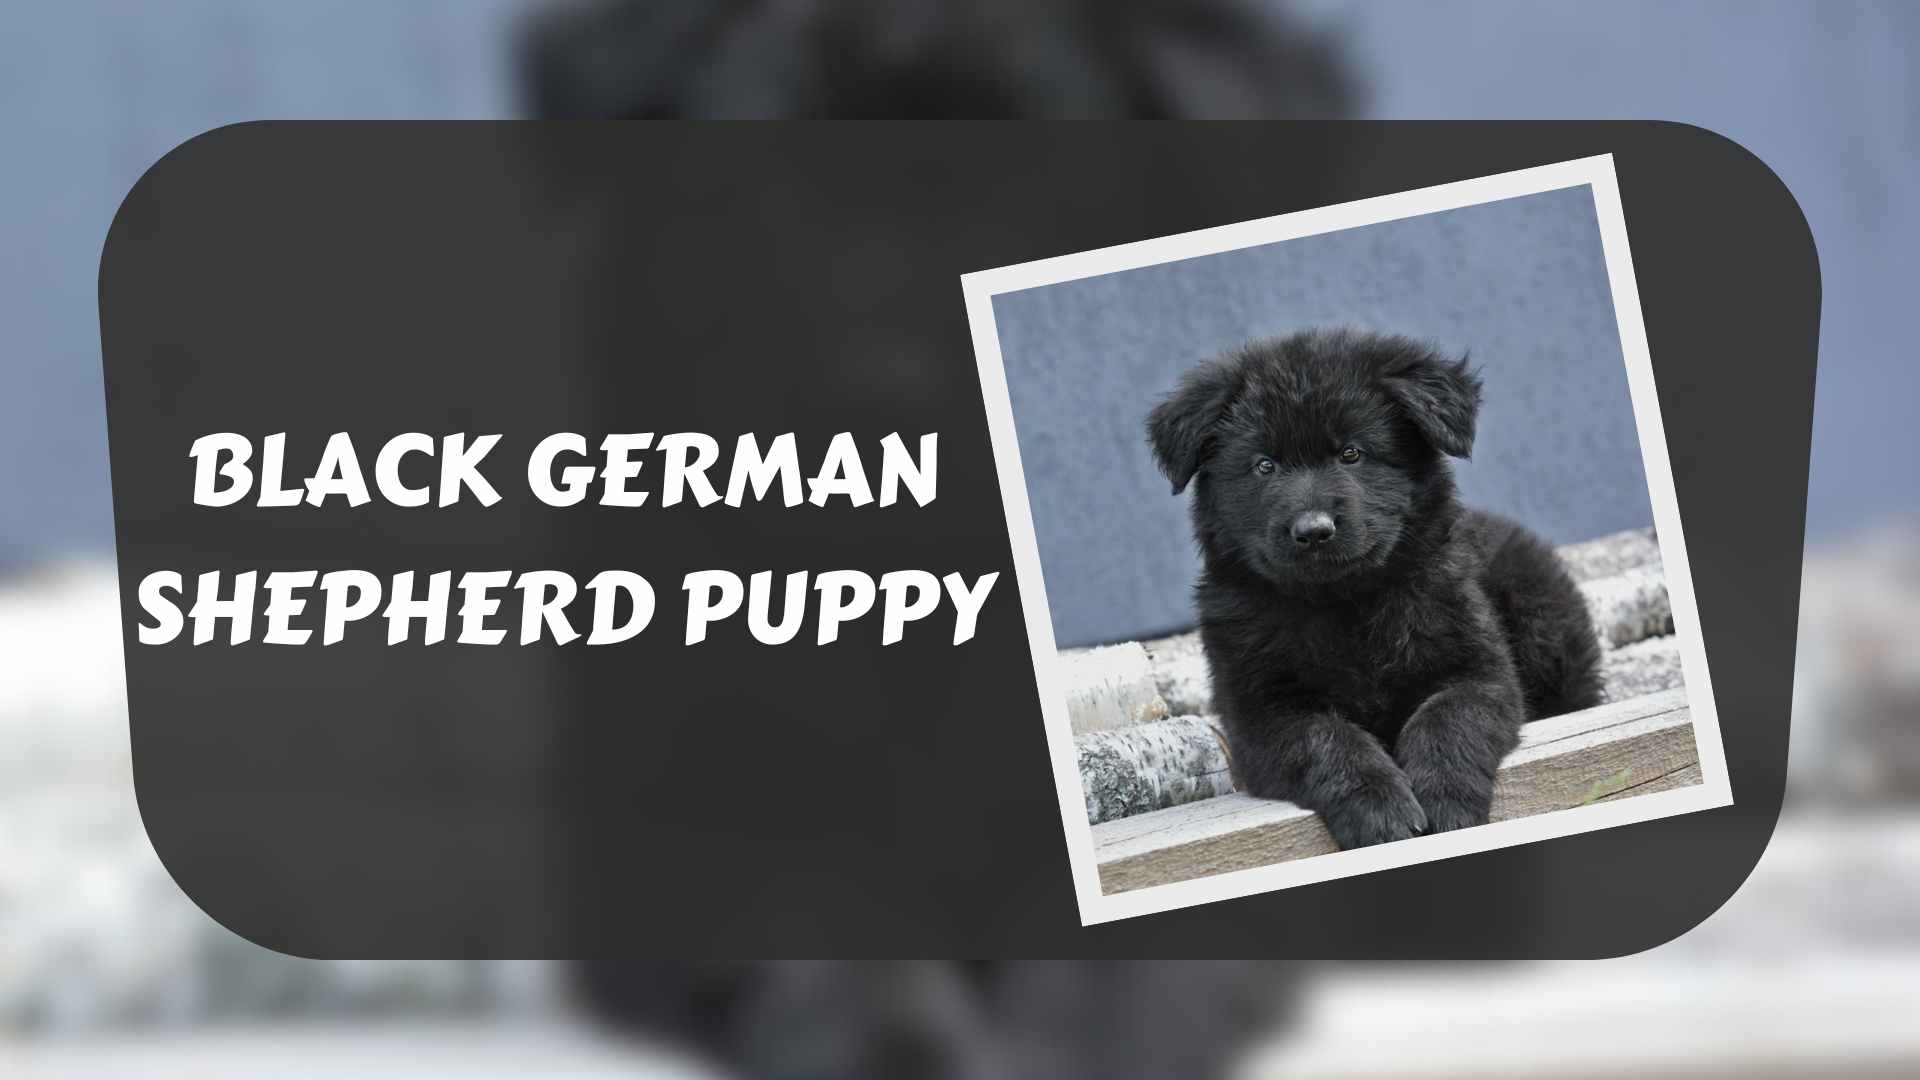 Black German Shepherd Puppy - The Perfect Breed for Shepherd ...